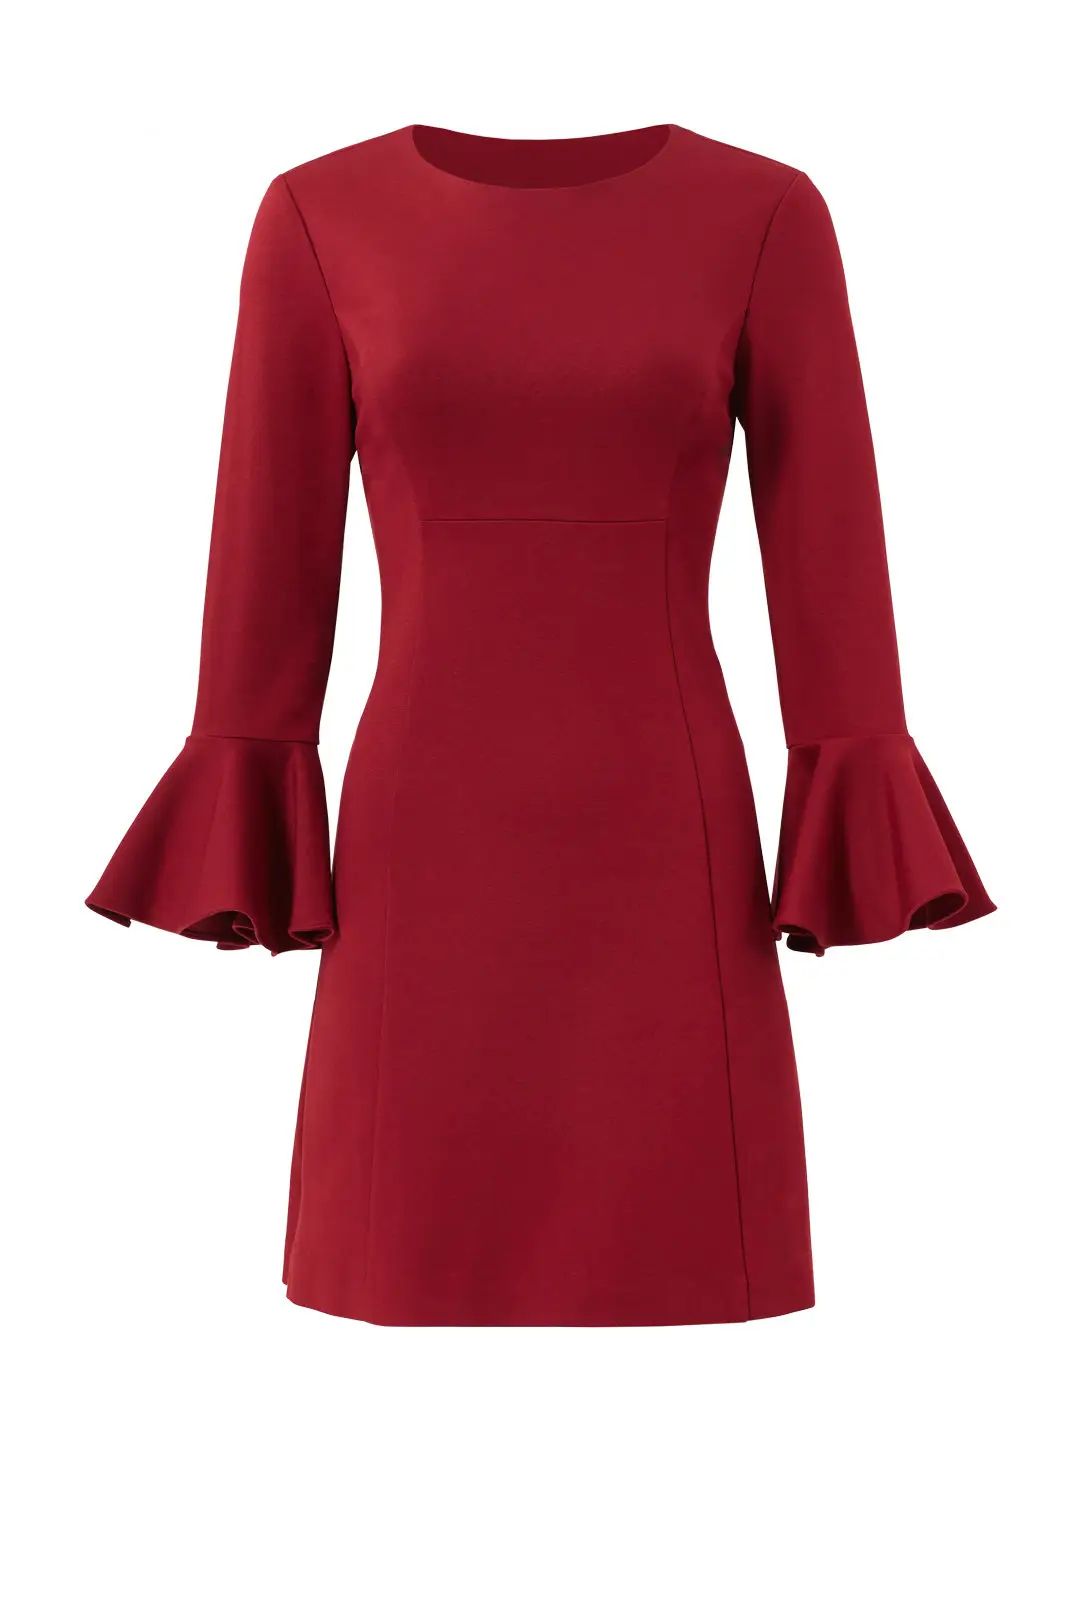 Trina Turk Red Panache Dress | Rent The Runway